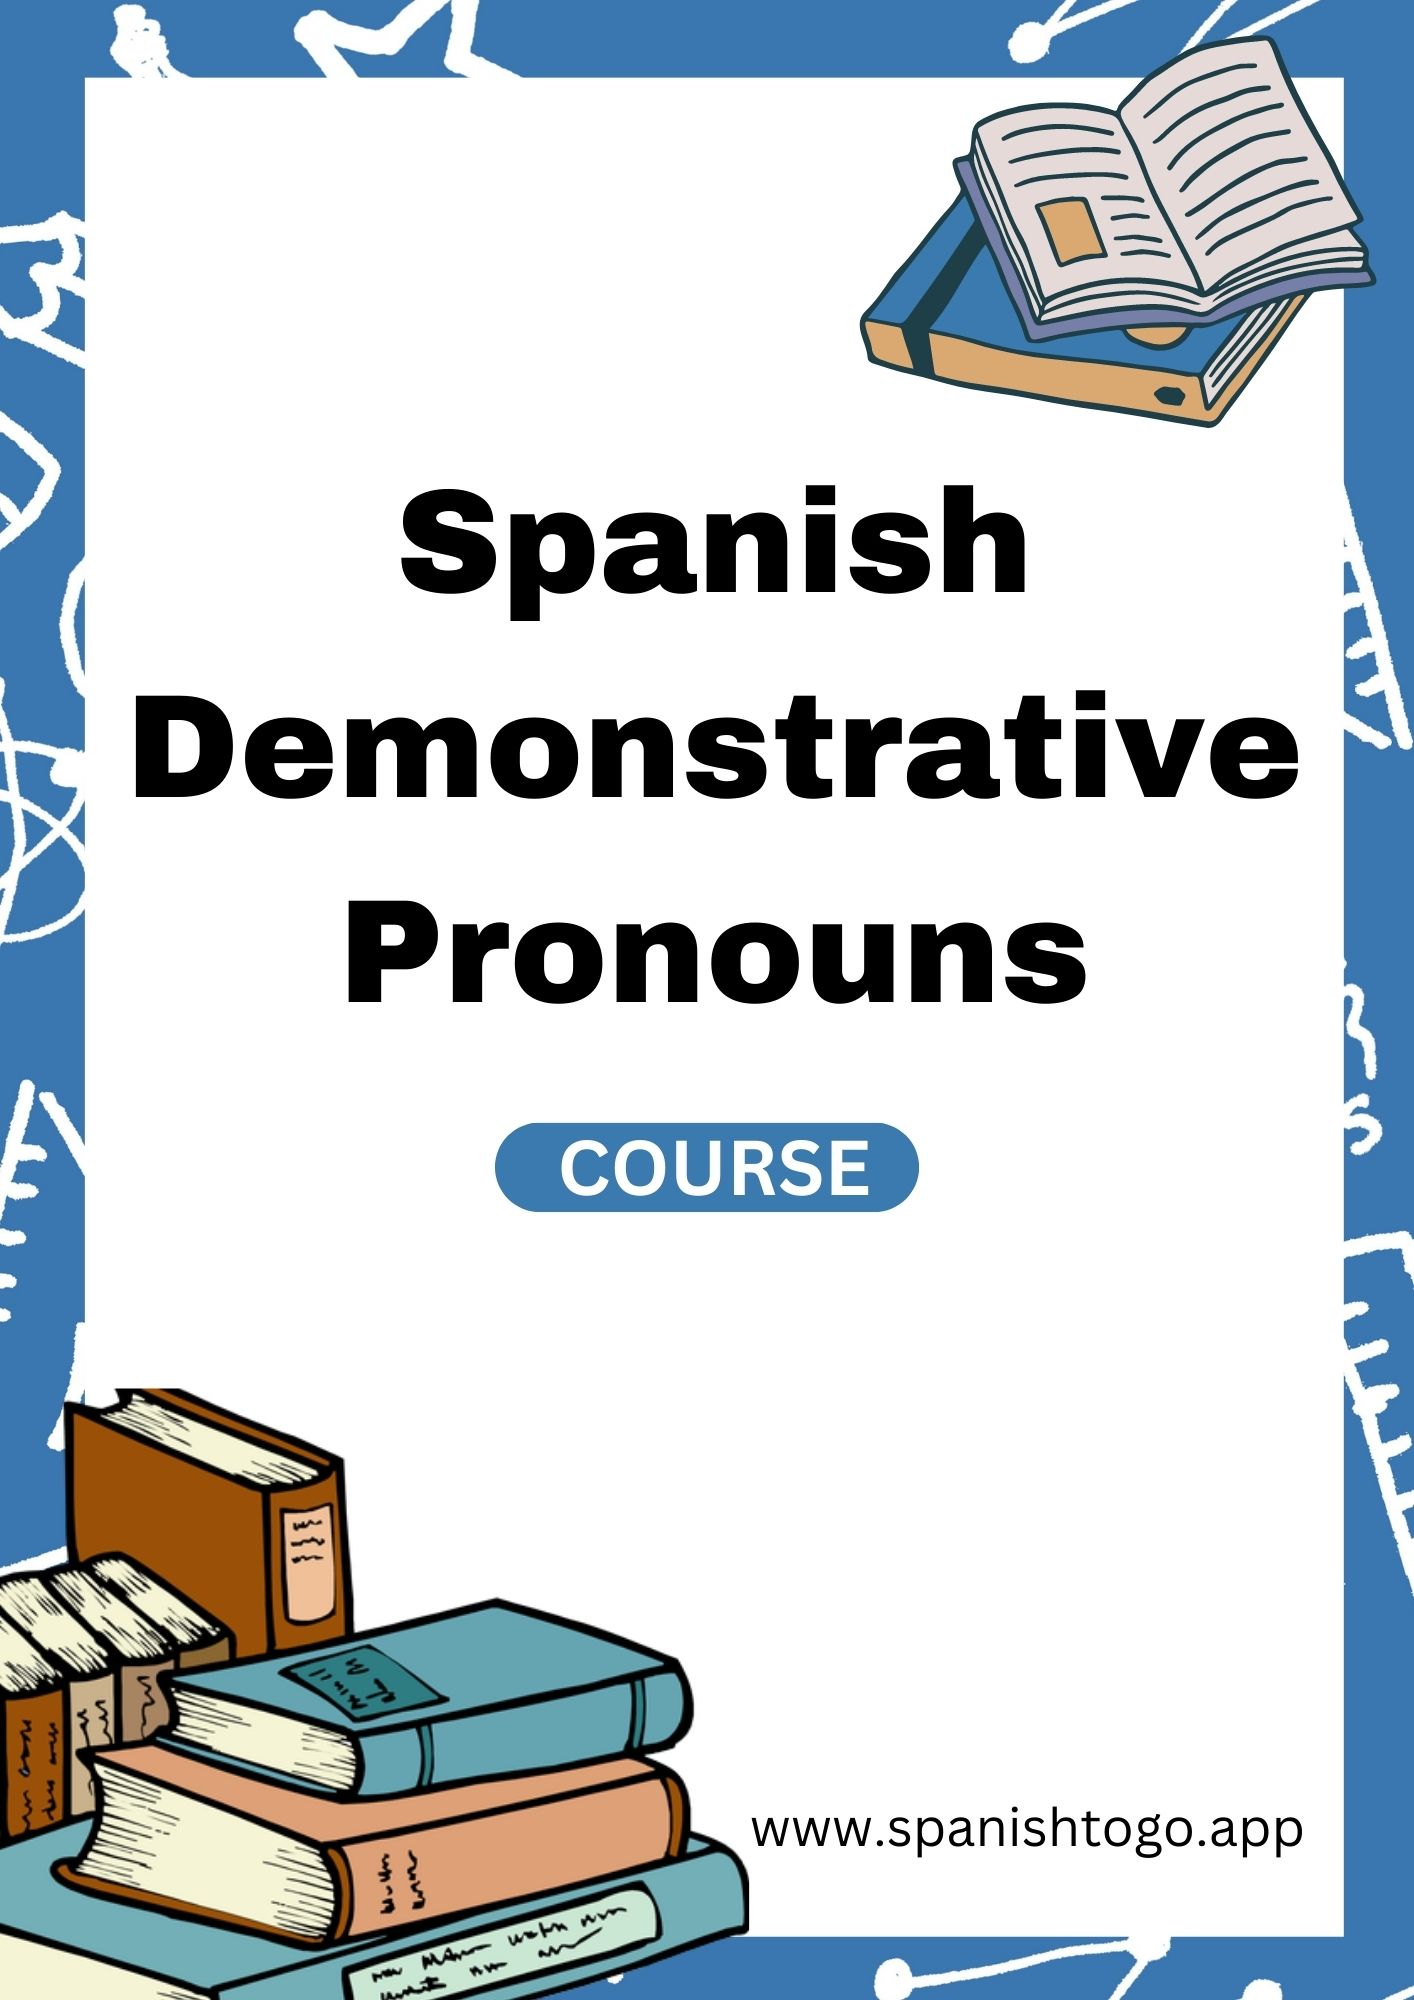 Spanish Demonstrative Pronouns